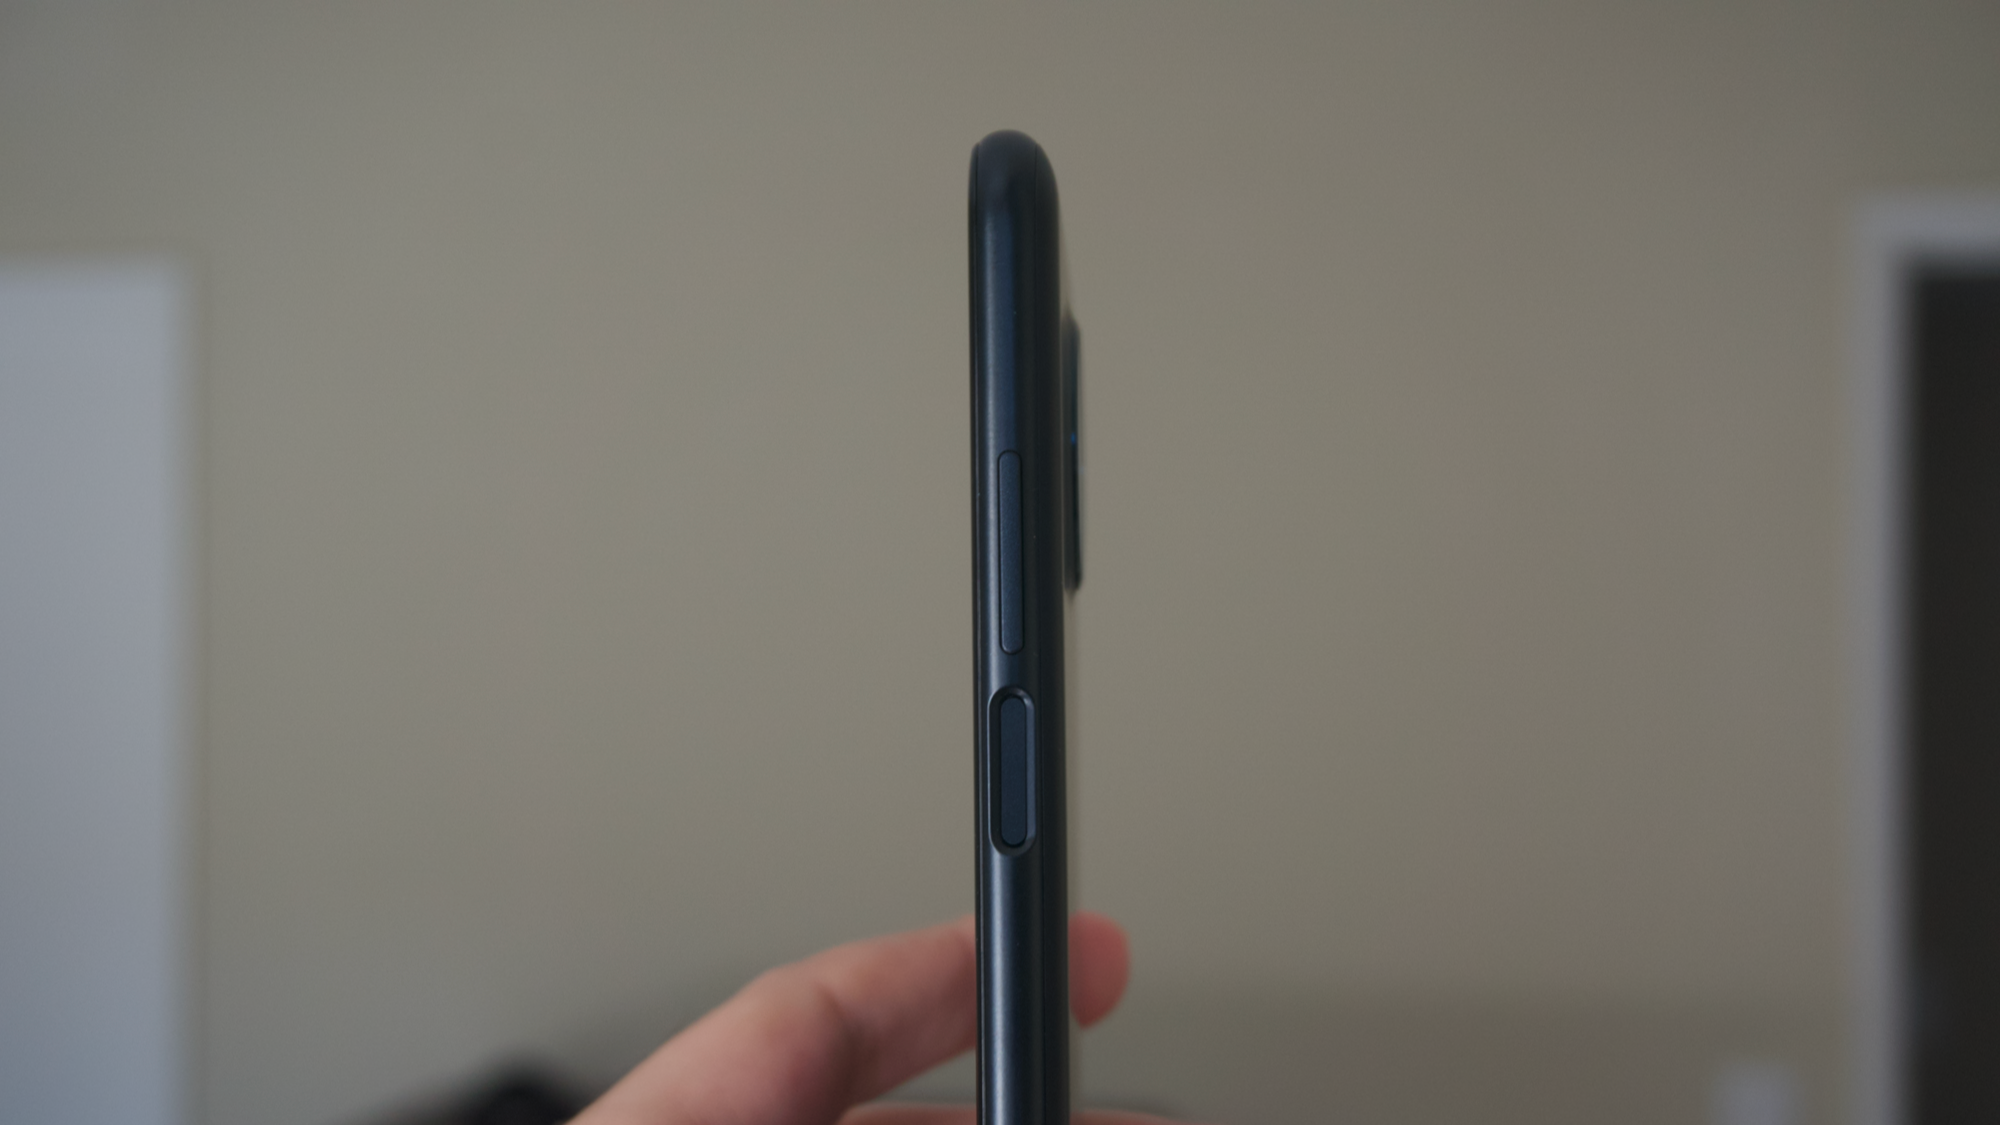 The power button, fingerprint sensor, and volume rocker on the Nokia X100